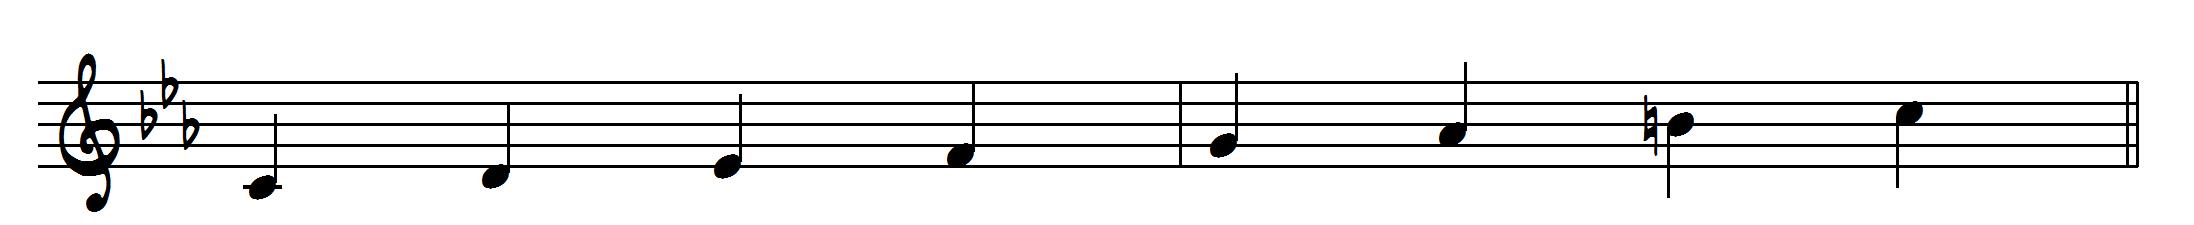 c-harmonic-minor